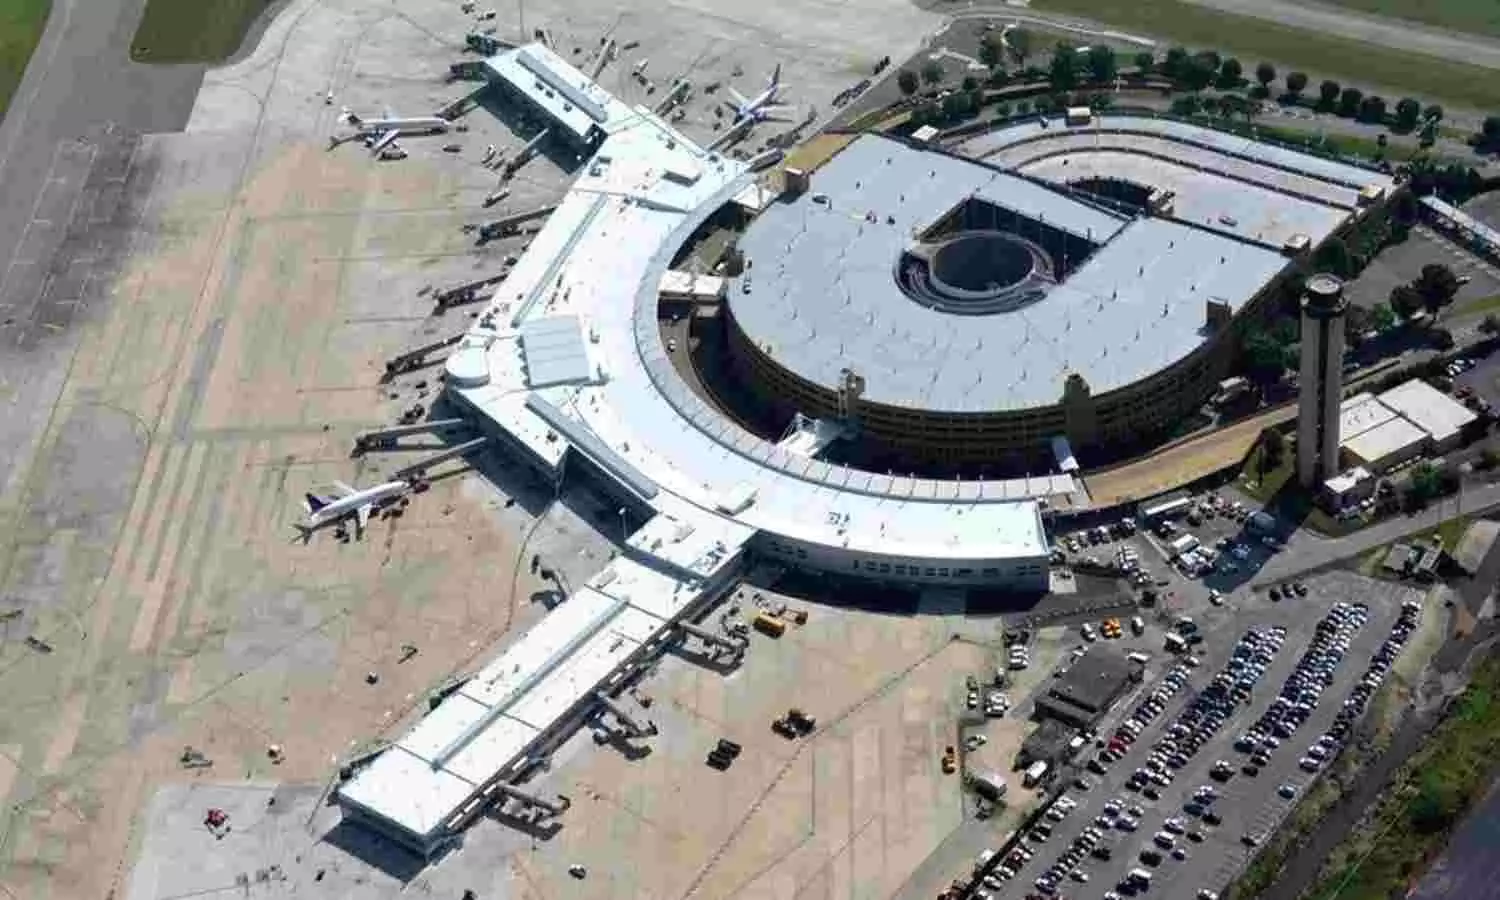 Birmingham-Shuttlesworth International Airport is Alabamas largest airport